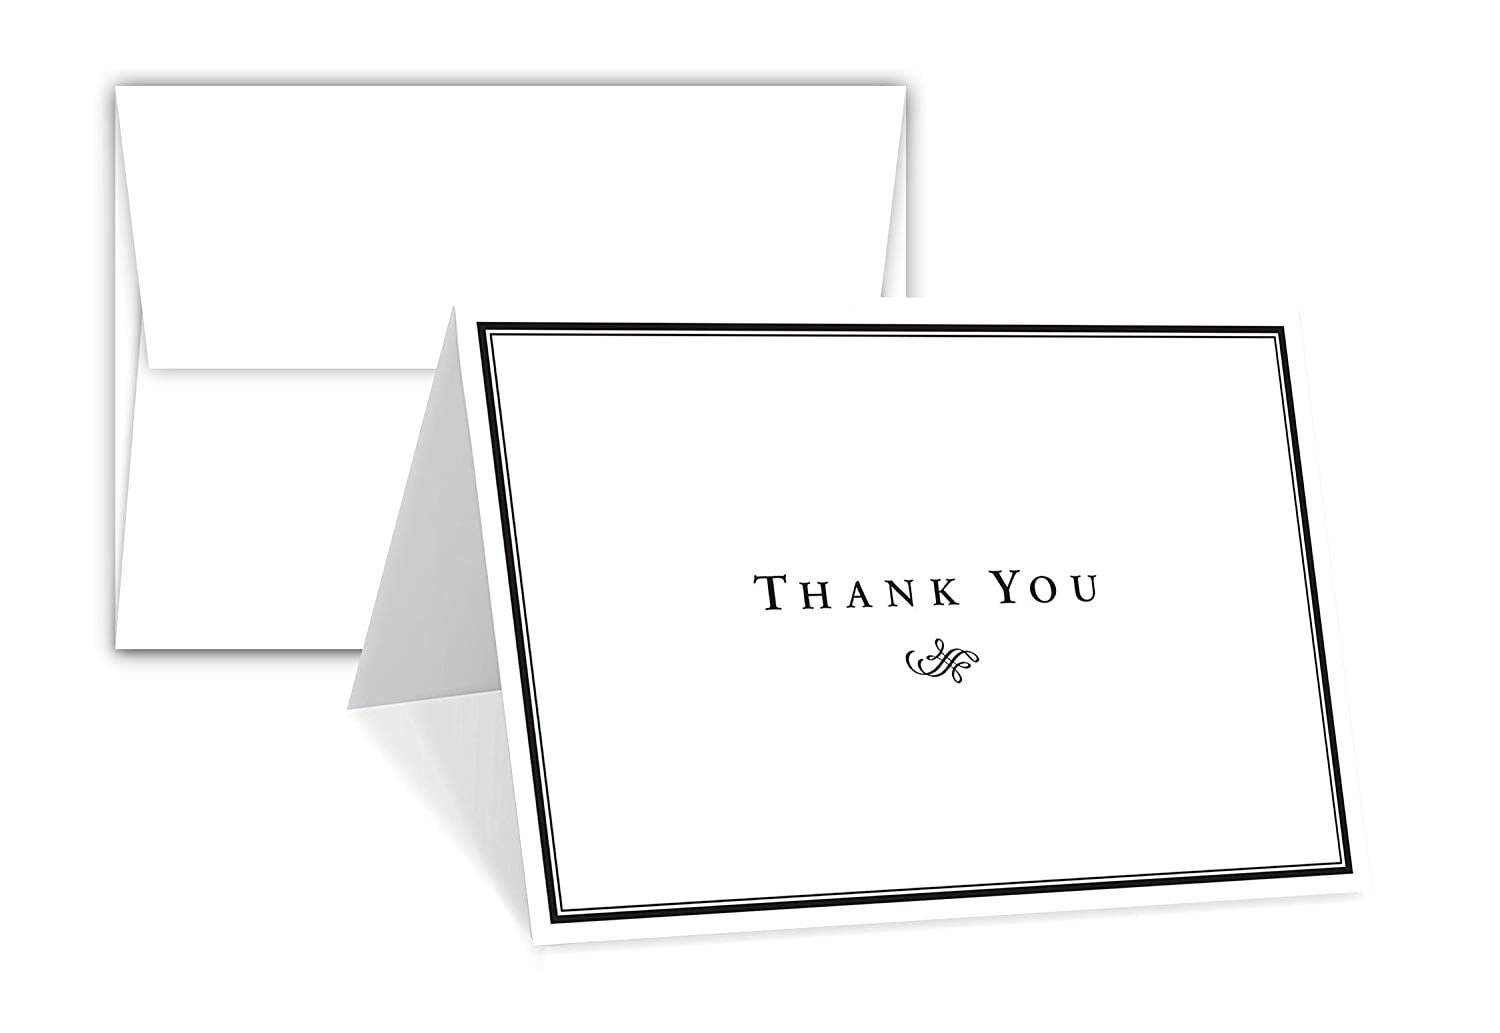 Black-Gold 5 Designs w Envelopes 100 Pcs Thank You Cards Bulk Set 4x6 Folded 